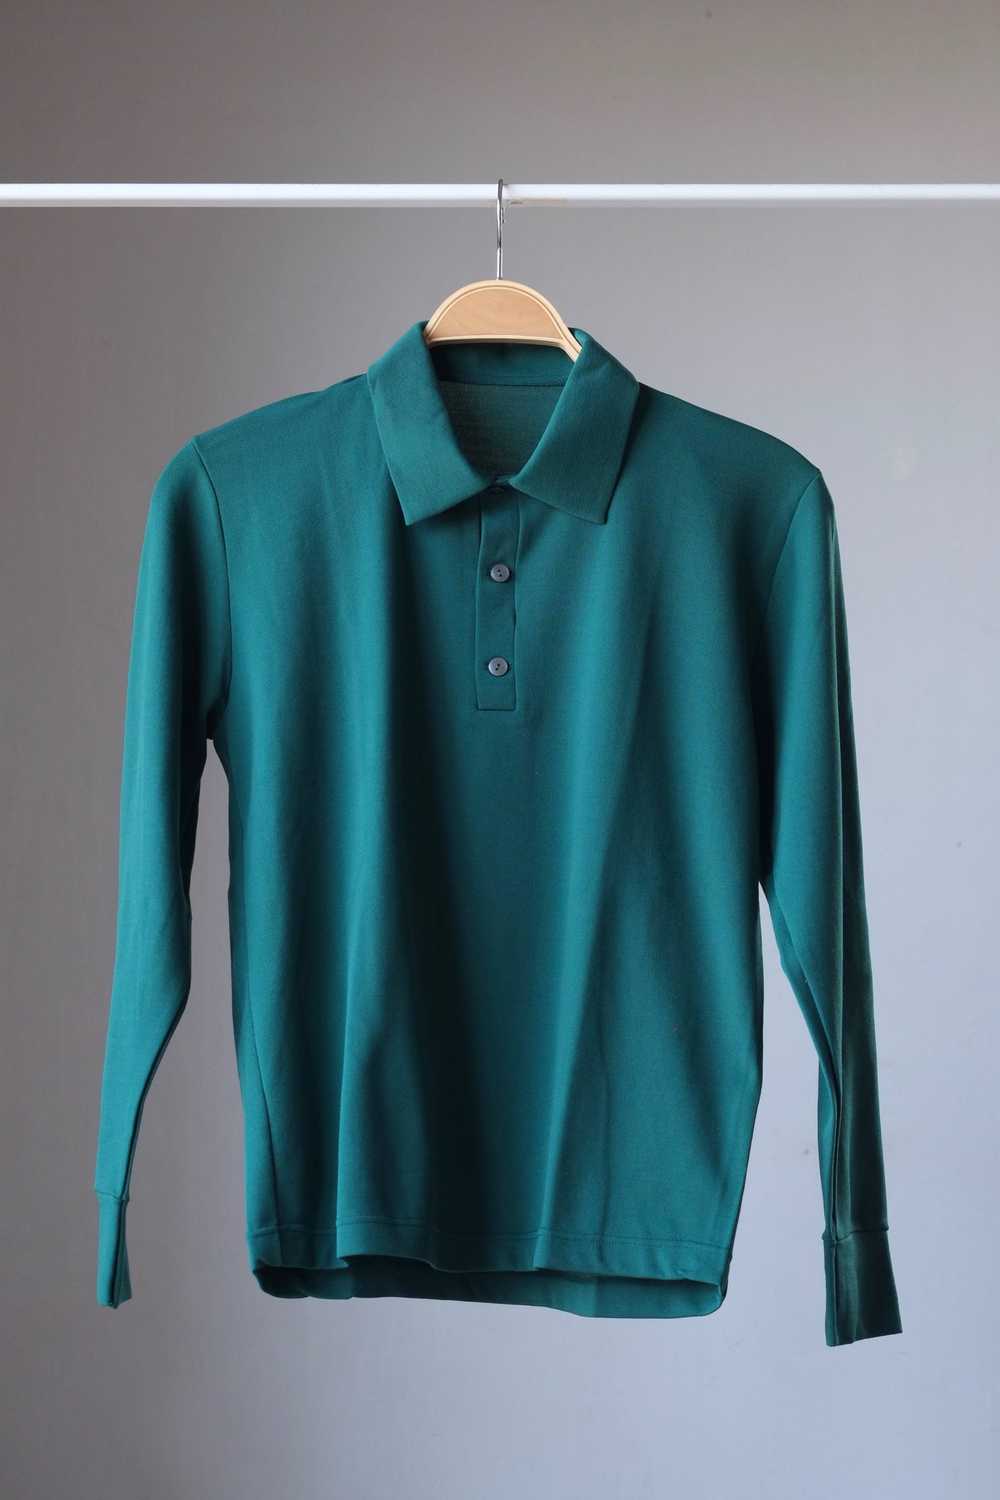 ZOFINA Long Sleeves 70s Polo Shirt - image 4